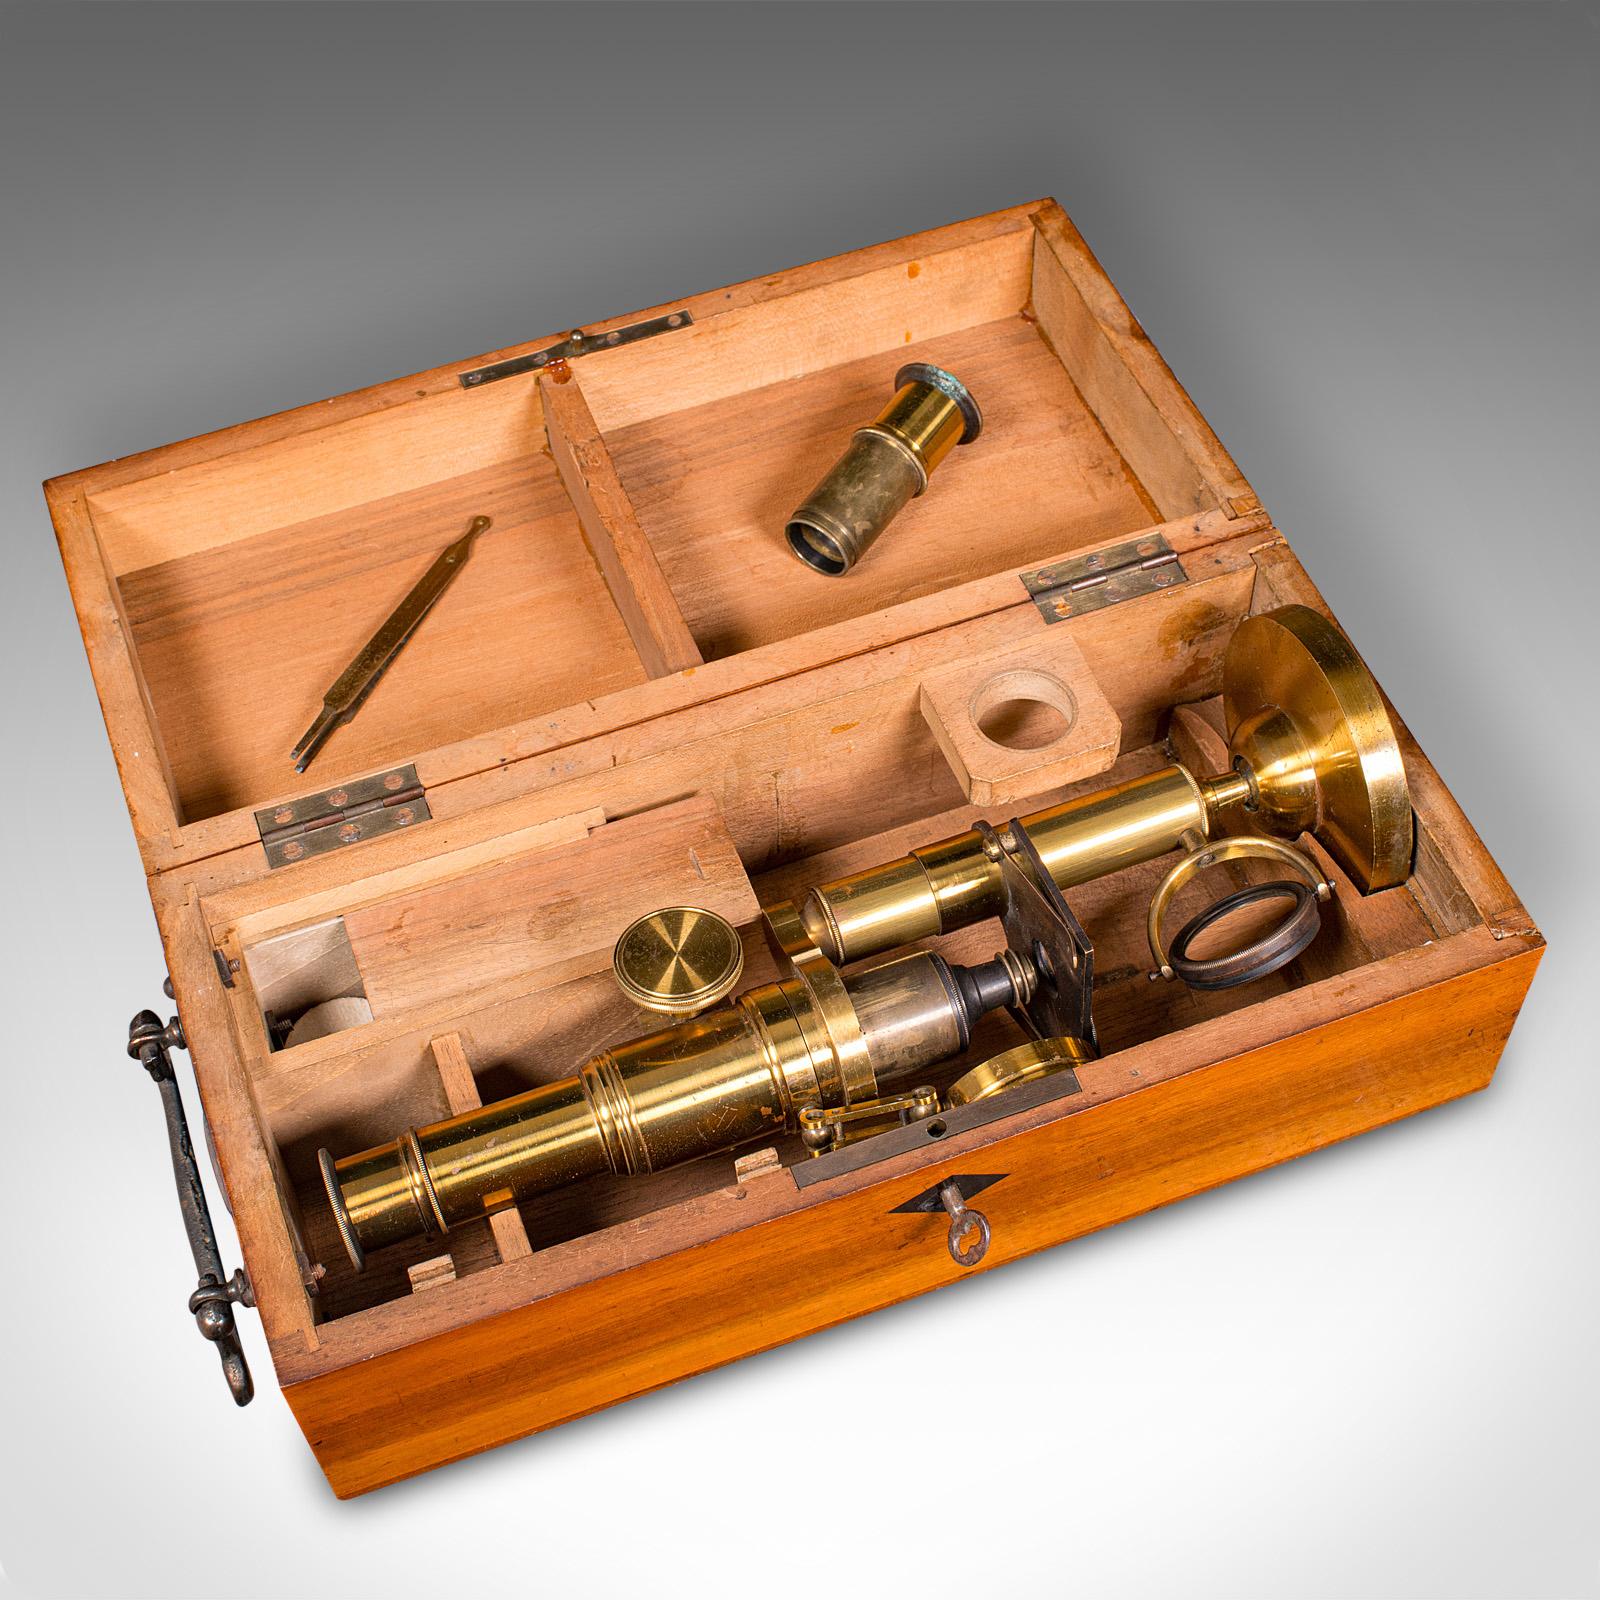 Antique Cased Scholar's Microscope, English, Brass Scientific Instrument, C.1920 For Sale 6